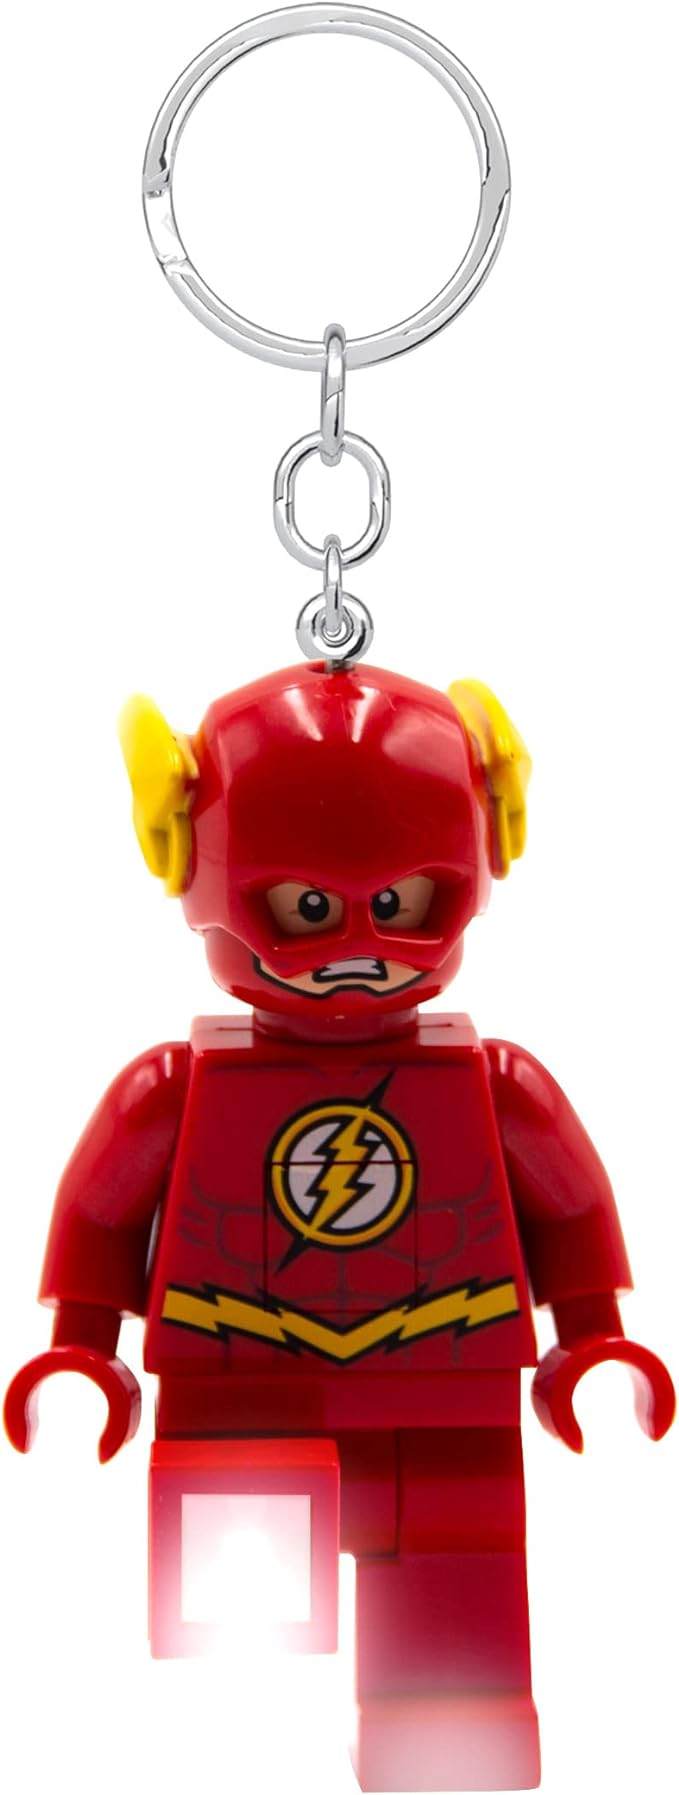 Lego The Flash Key Light